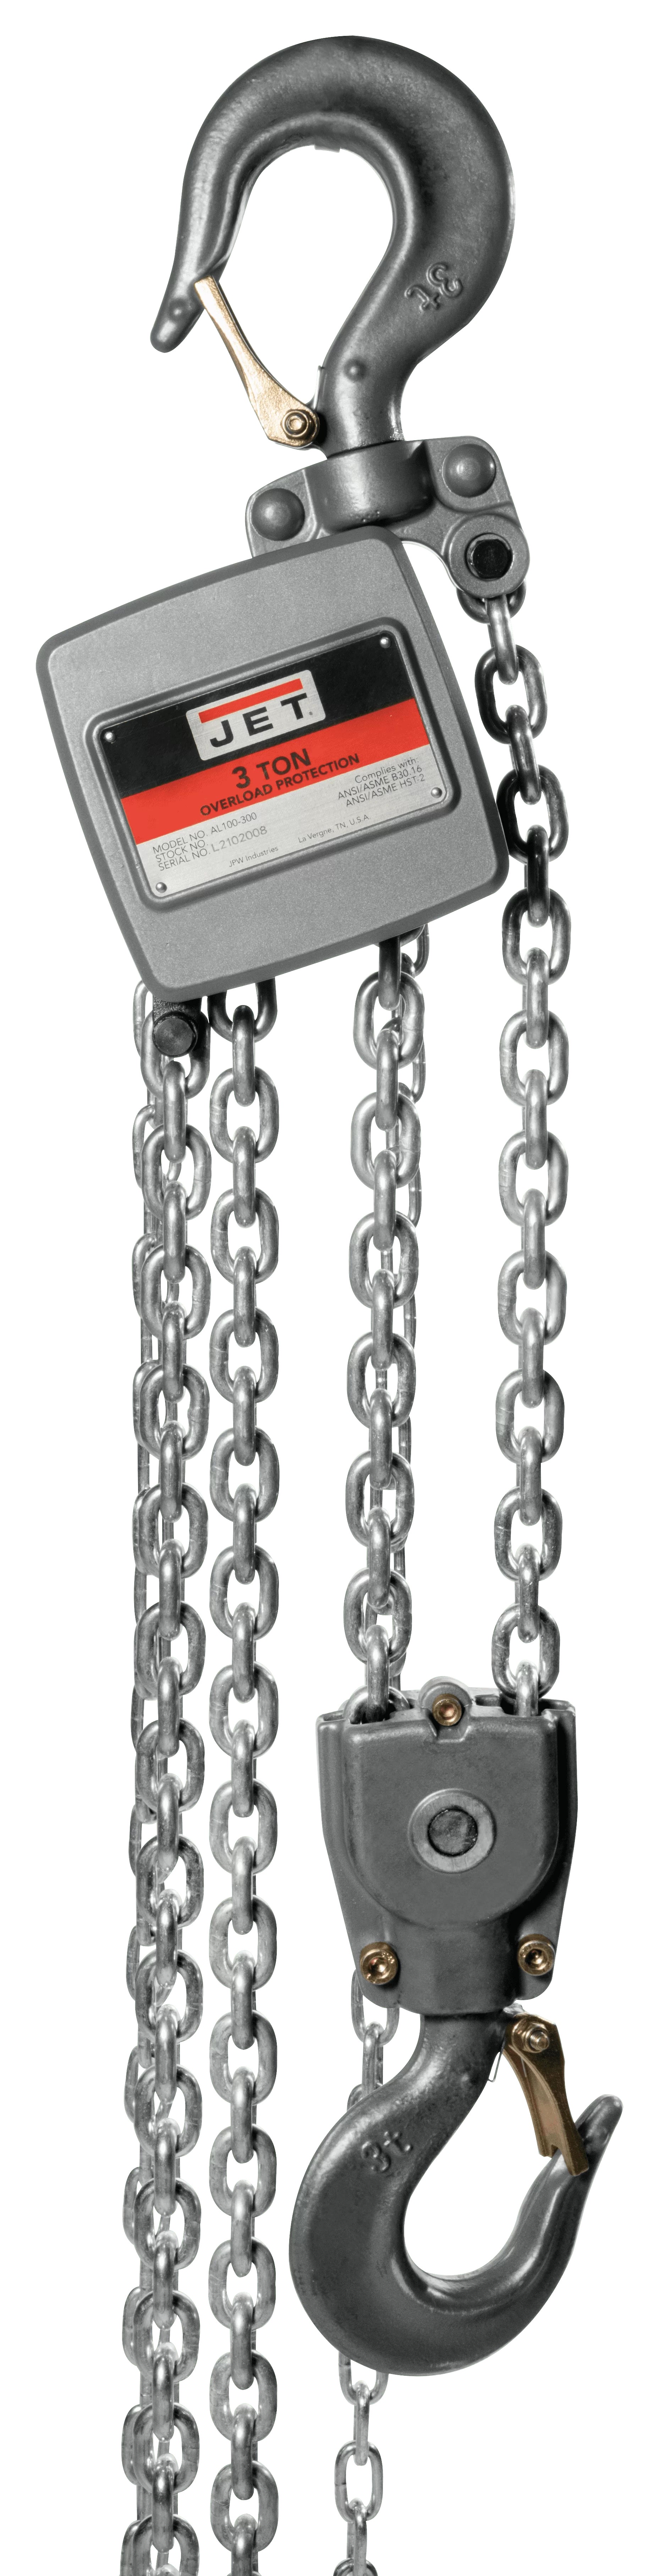 AL100-300-20 3 Ton Aluminum Hand Chain Hoist with 20ft of Lift